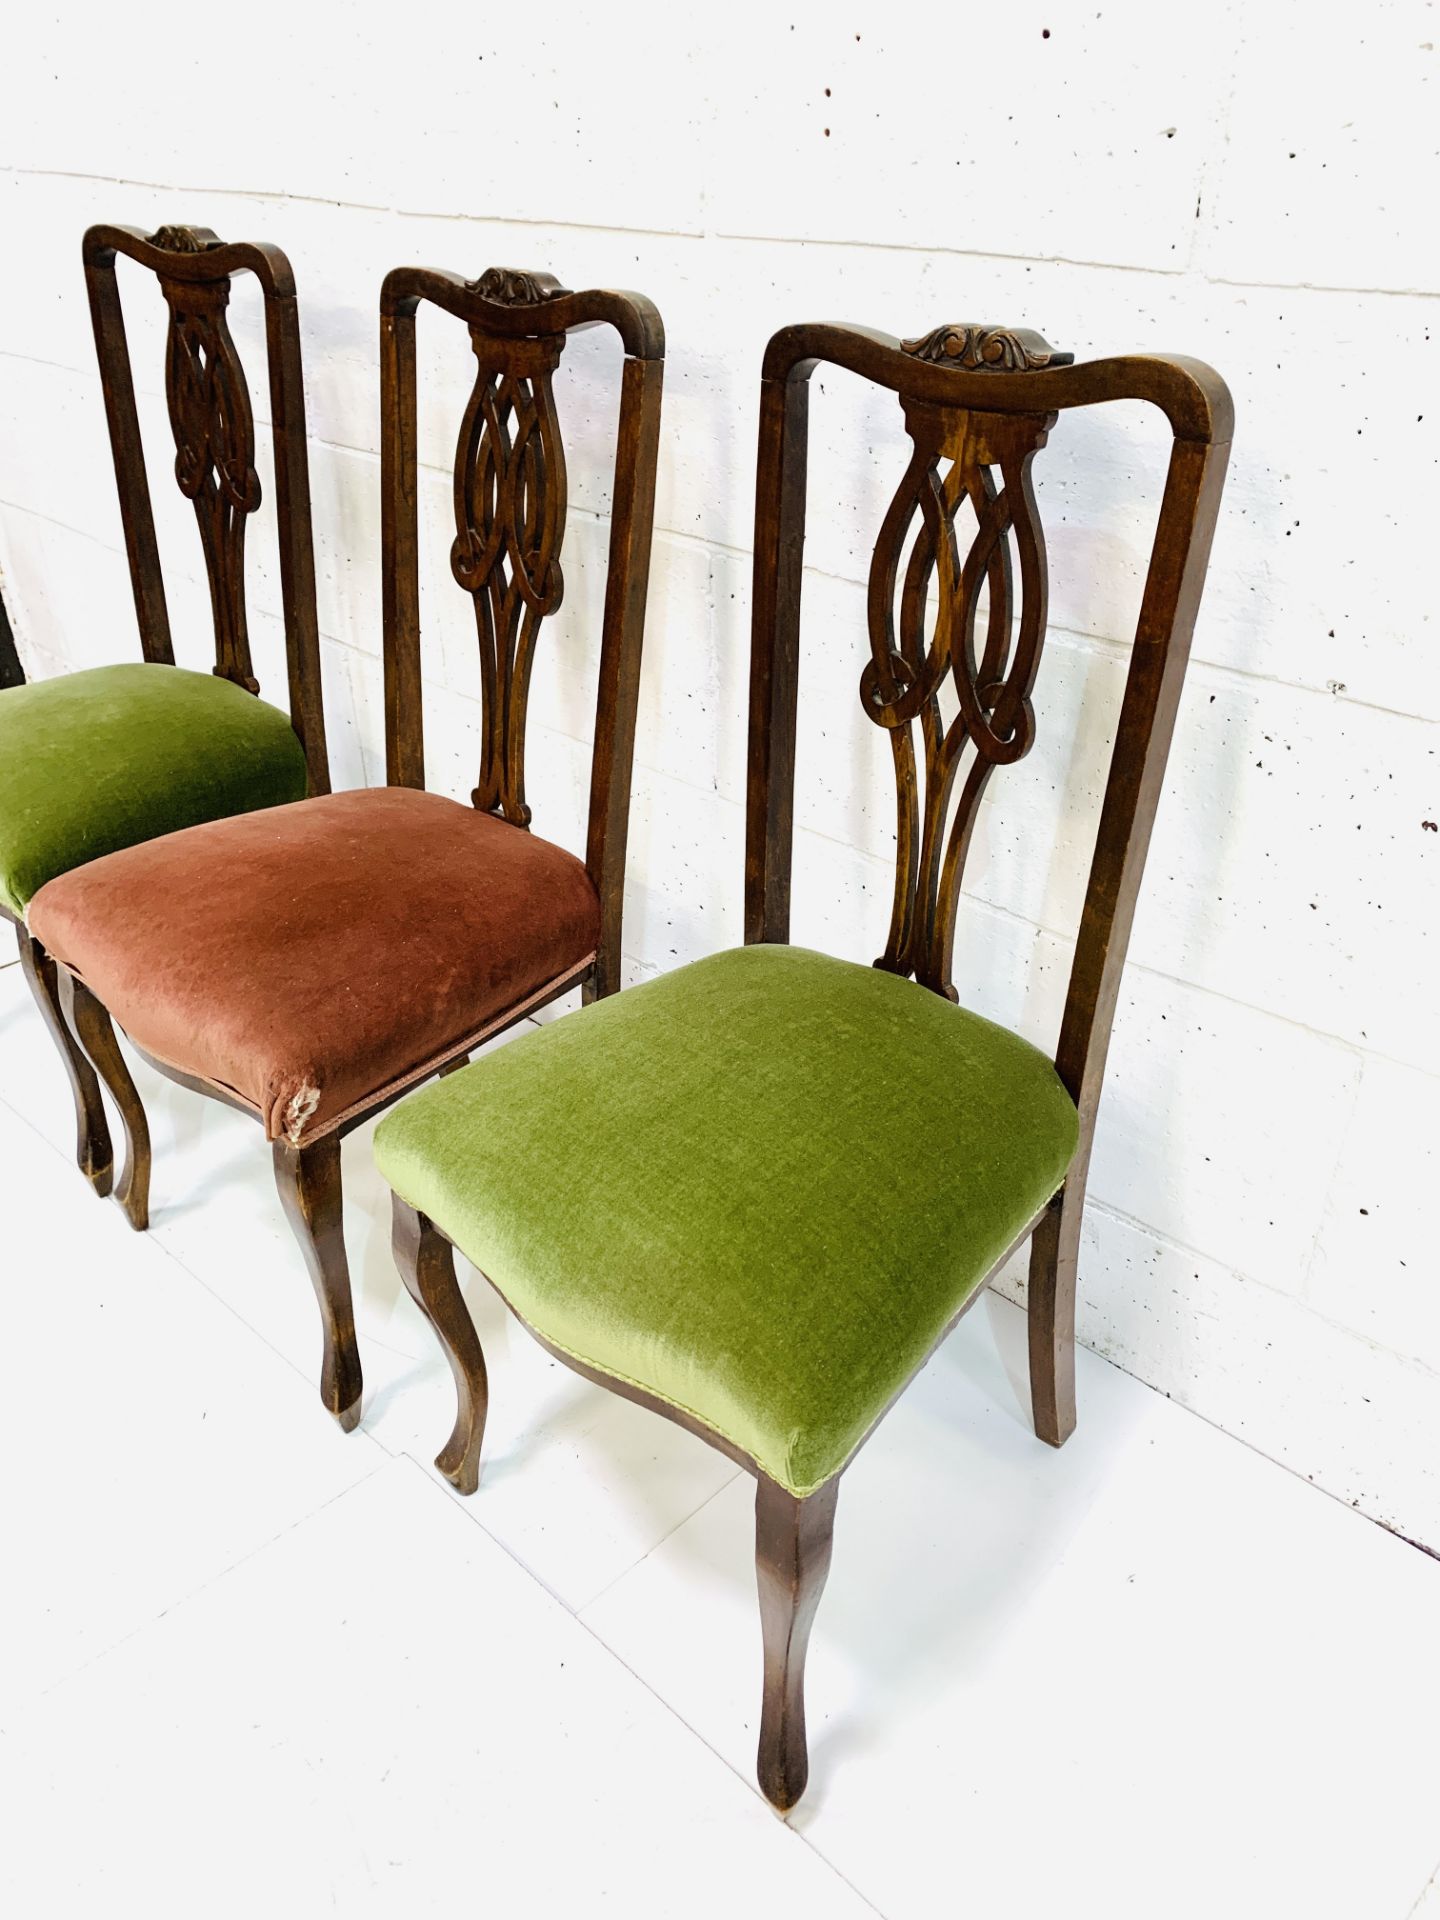 Three Georgian style mahogany dining chairs - Image 3 of 5